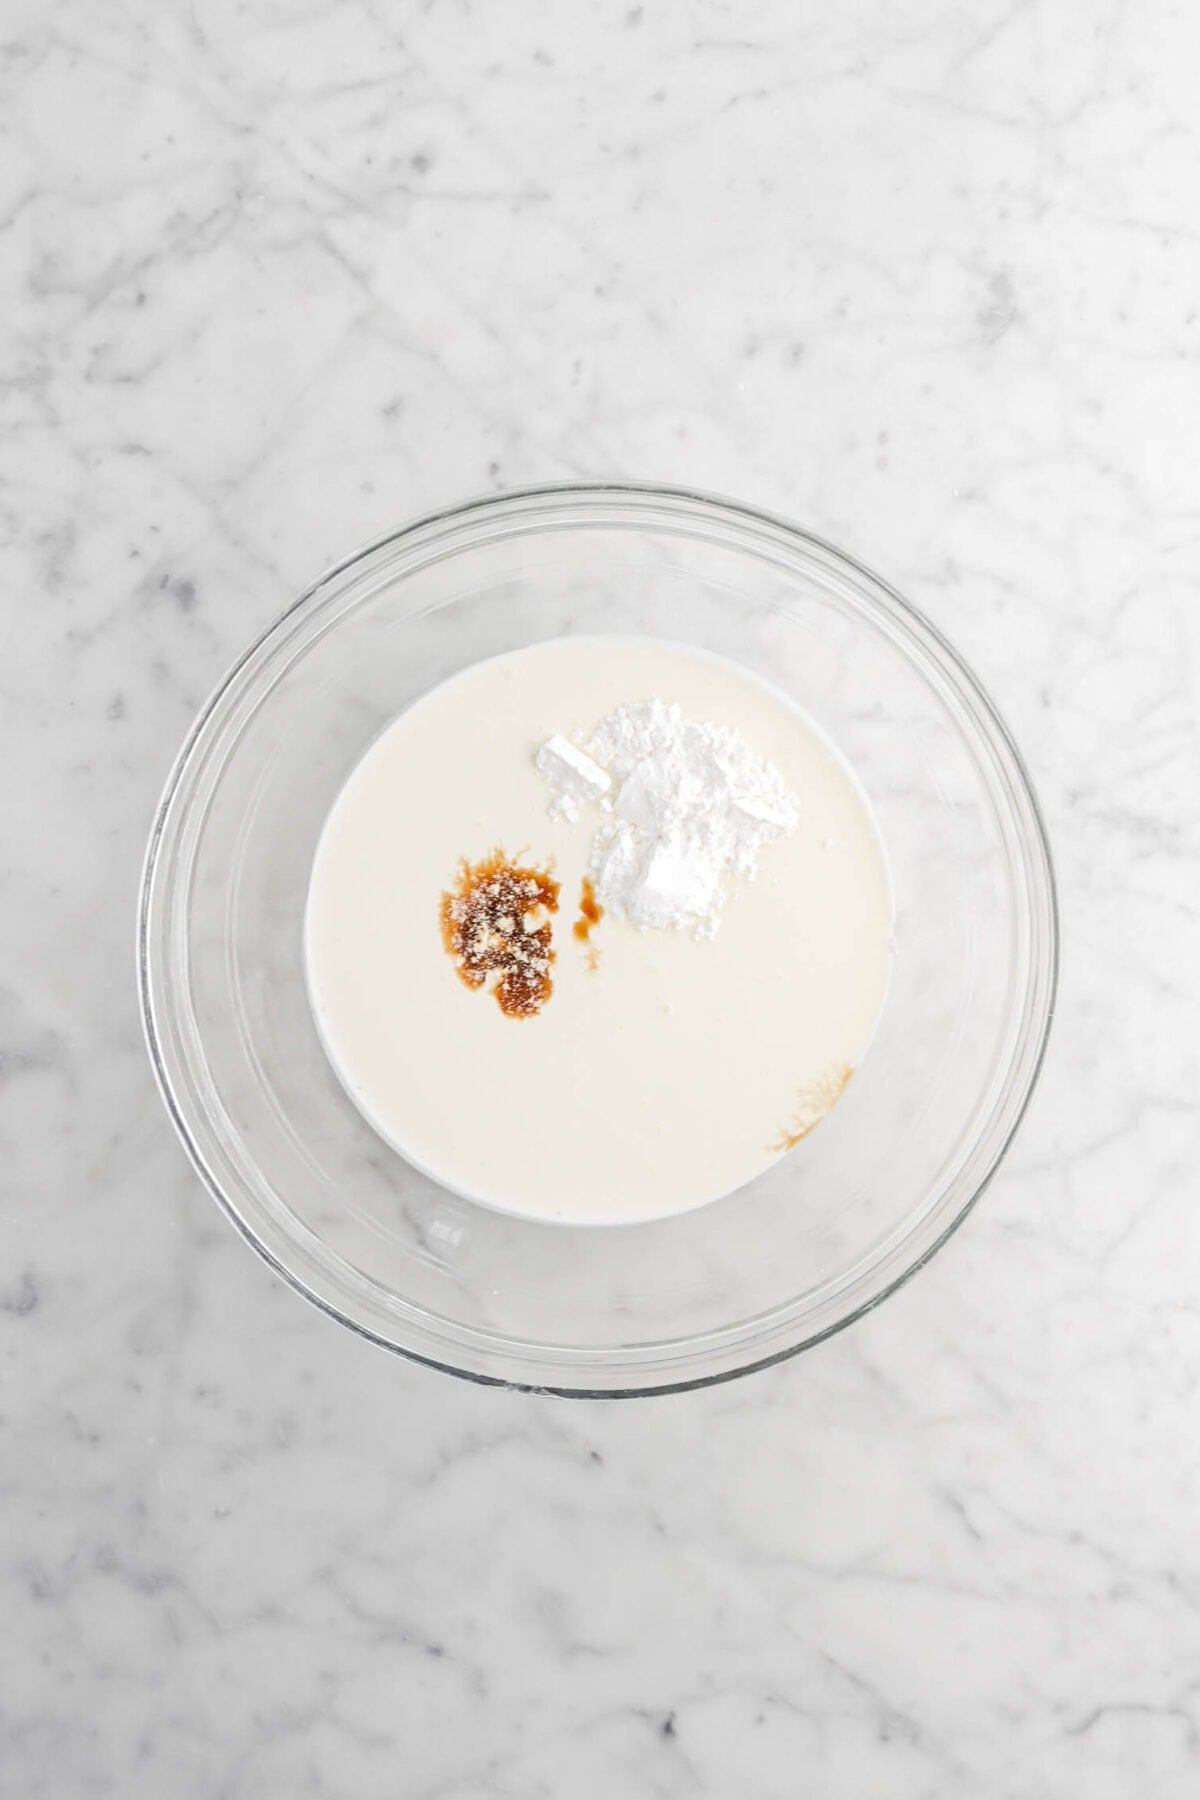 heavy cream, vanilla, and powdered sugar in large glass bowl